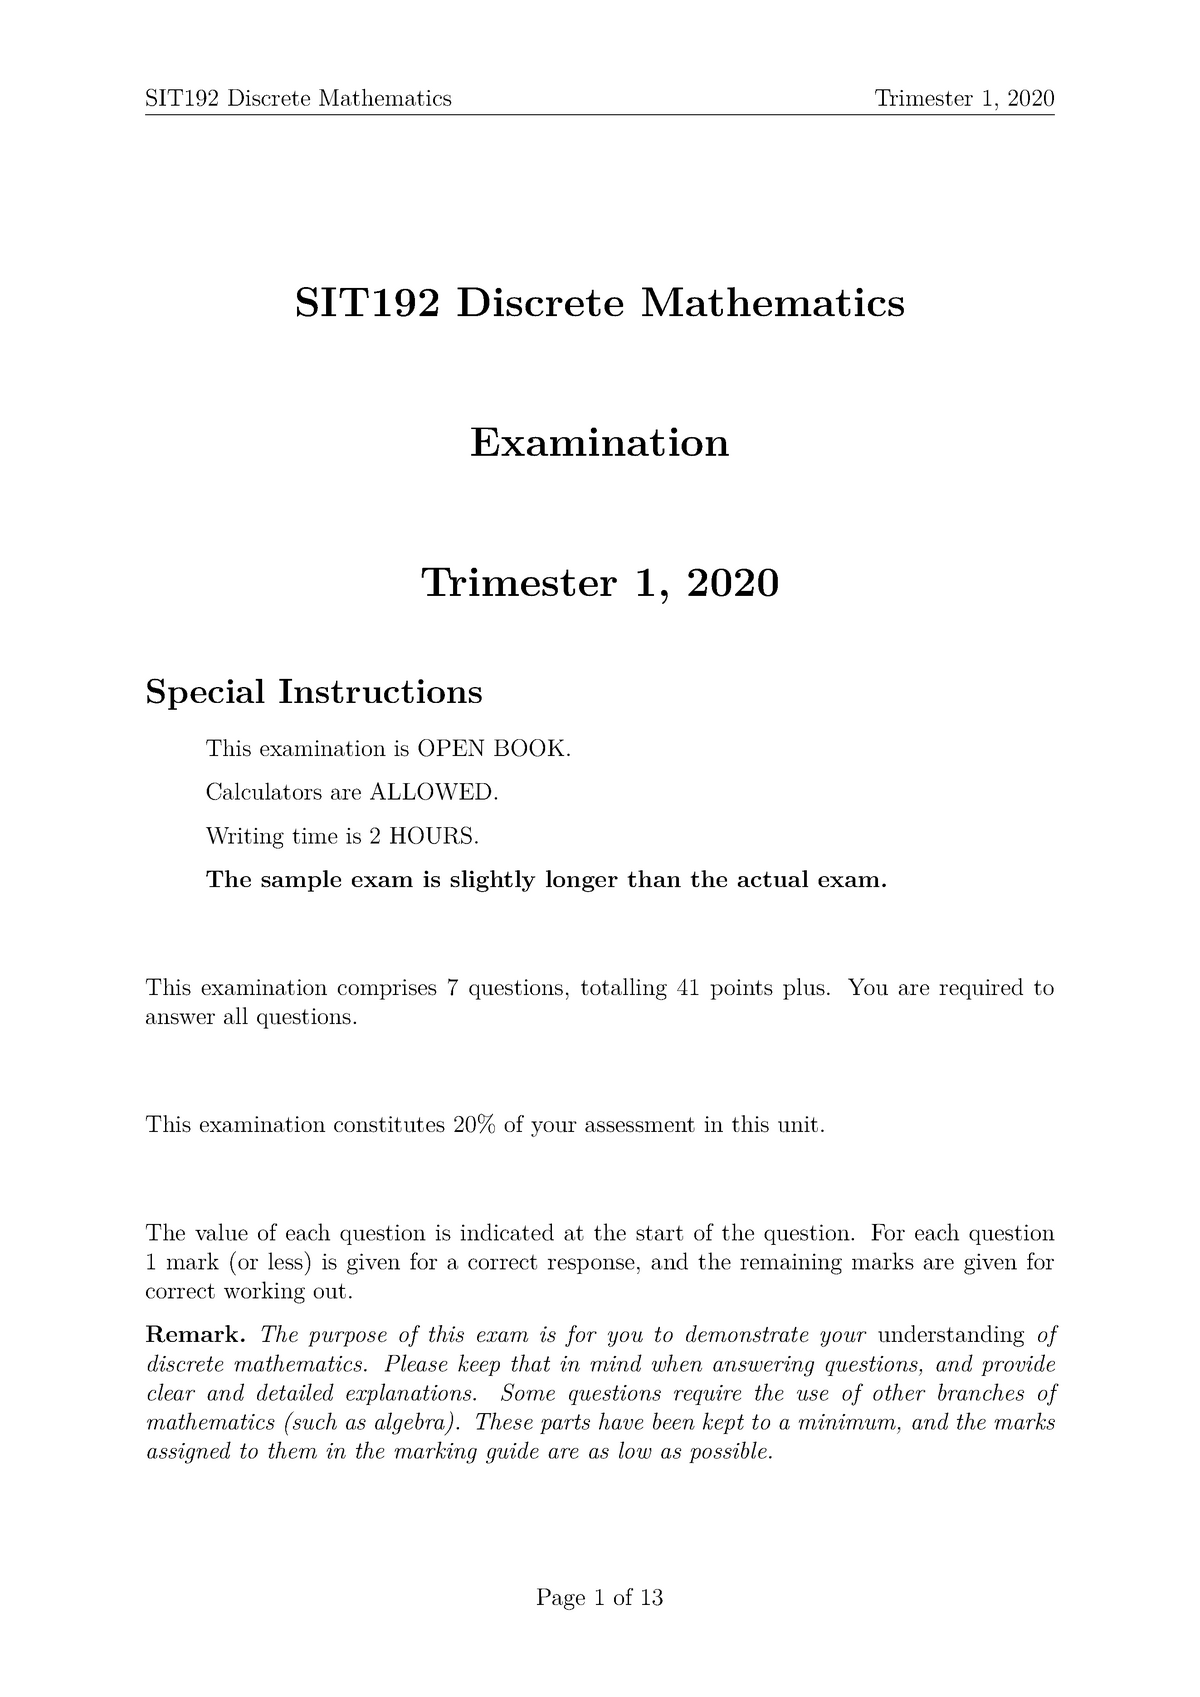 sample-practice-exam-answers-sit192-discrete-mathematics-examination